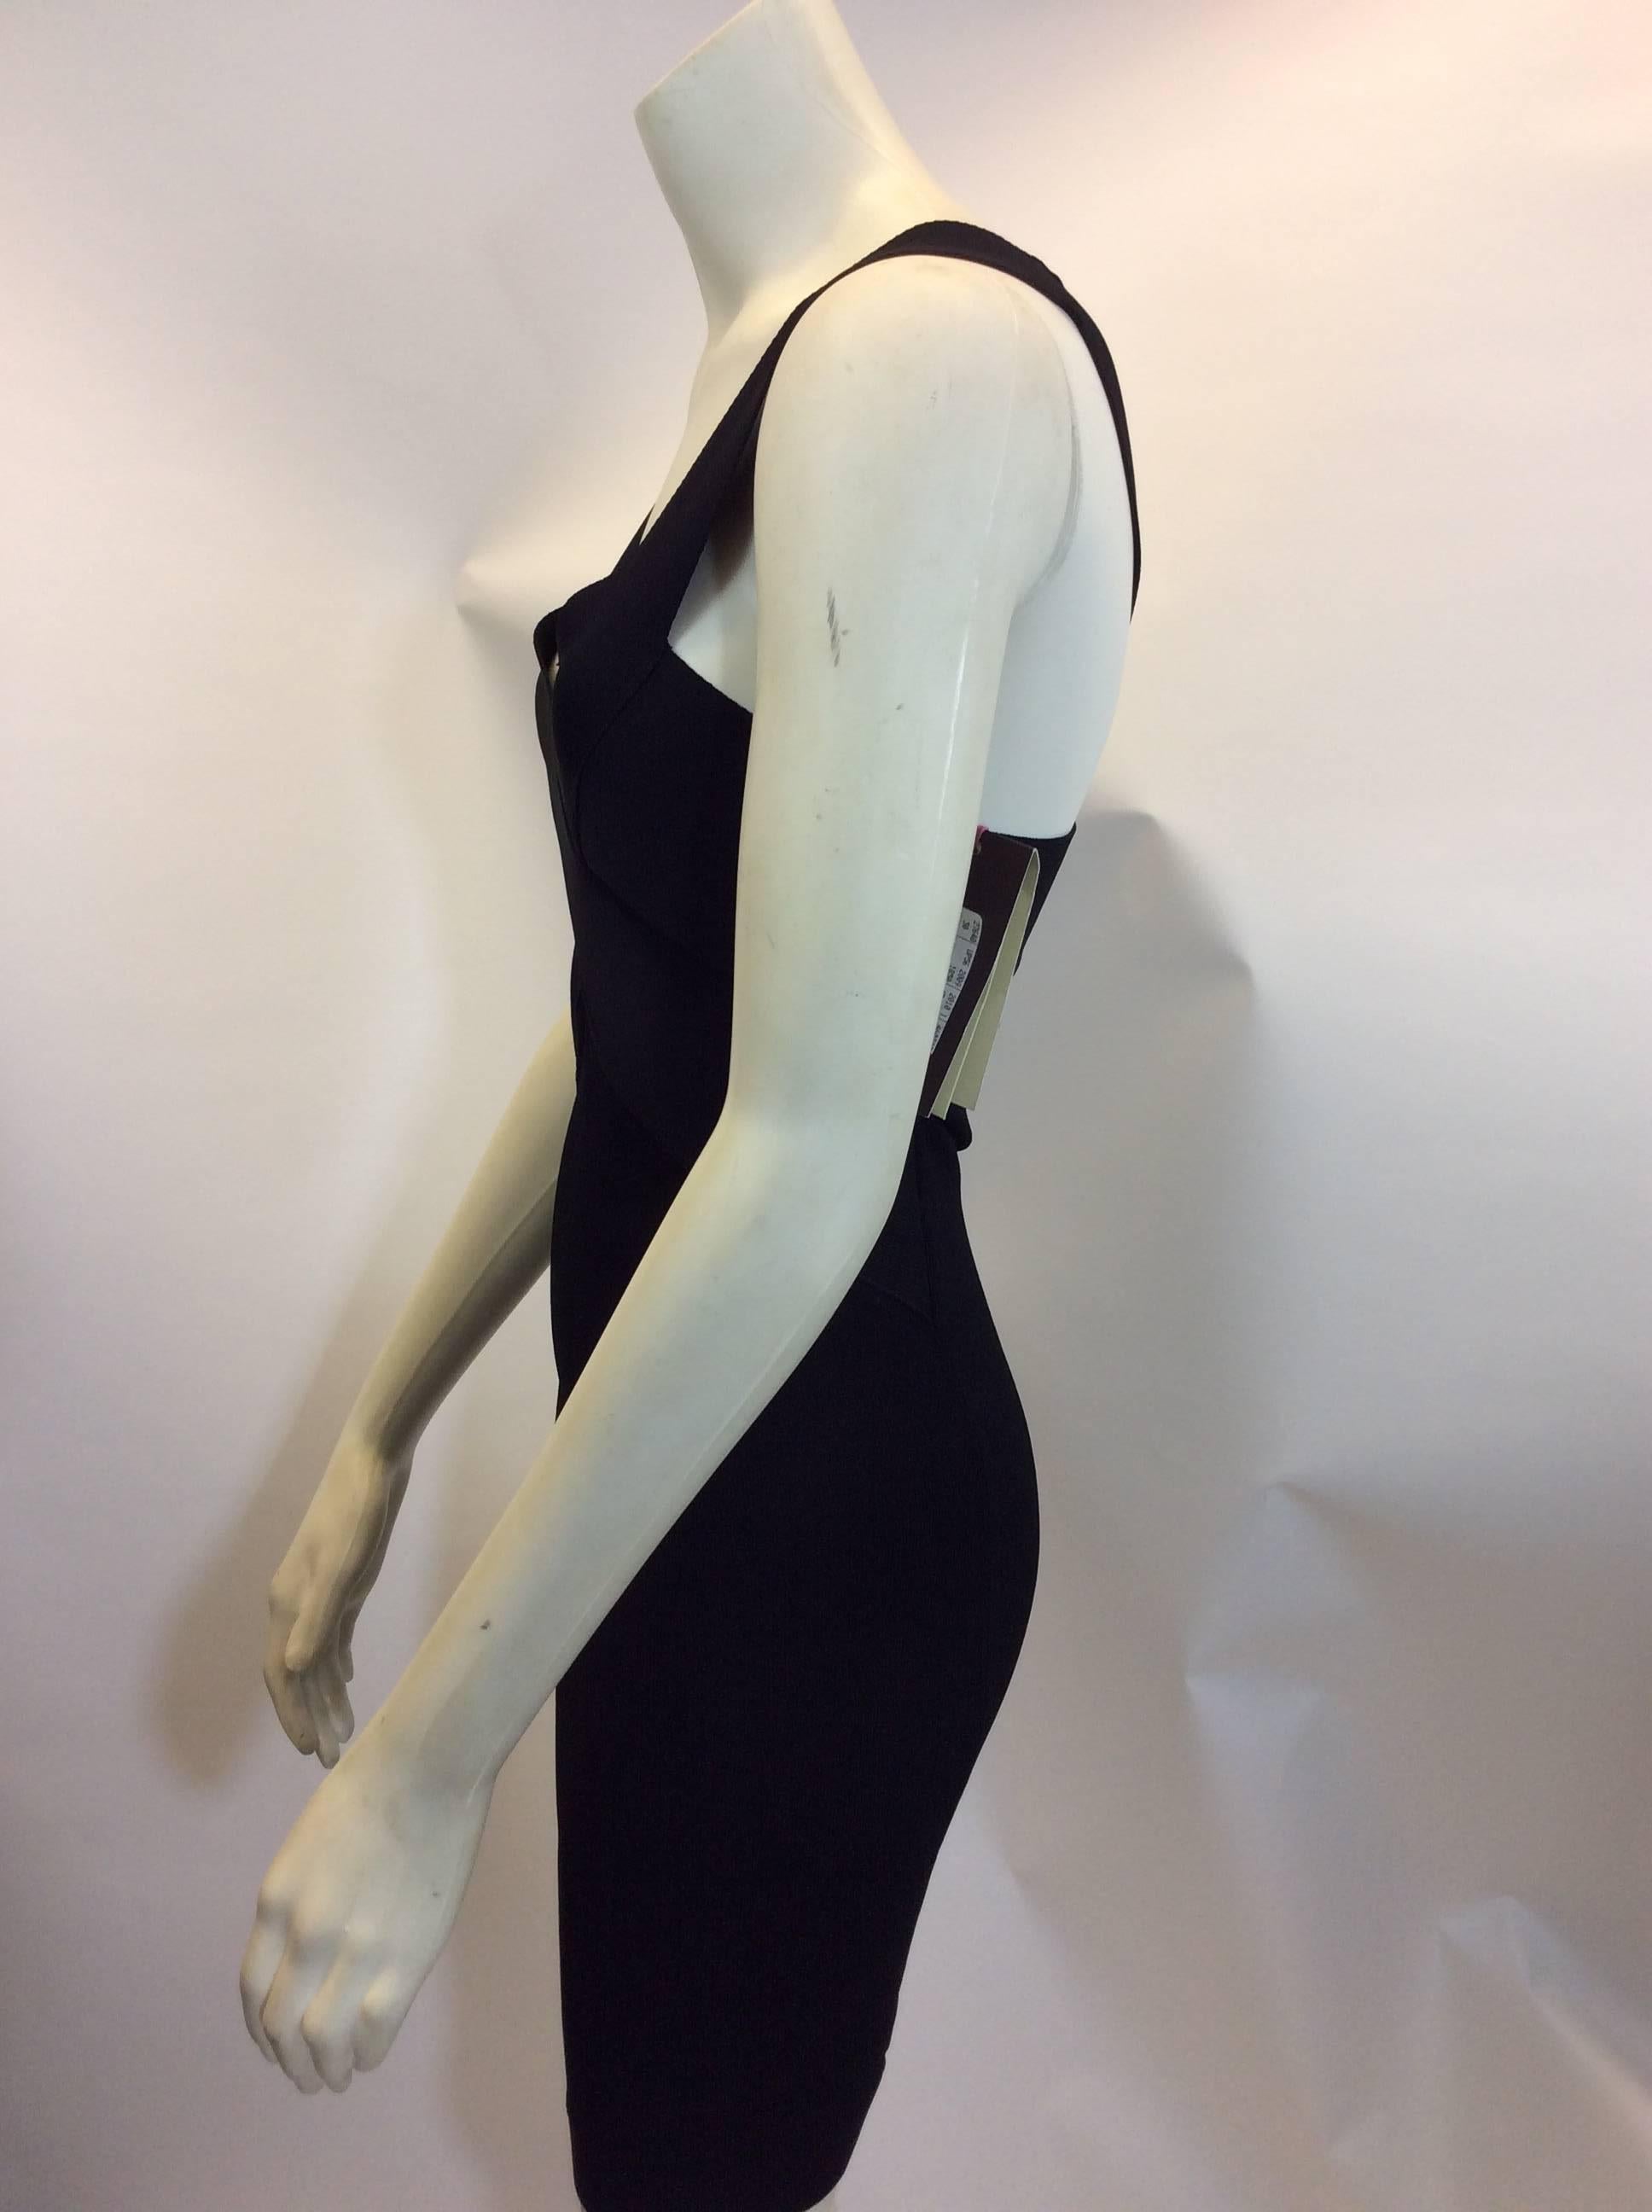 Stella McCartney NWT Bandage Dress
$299
Size 40
Made in Italy 
